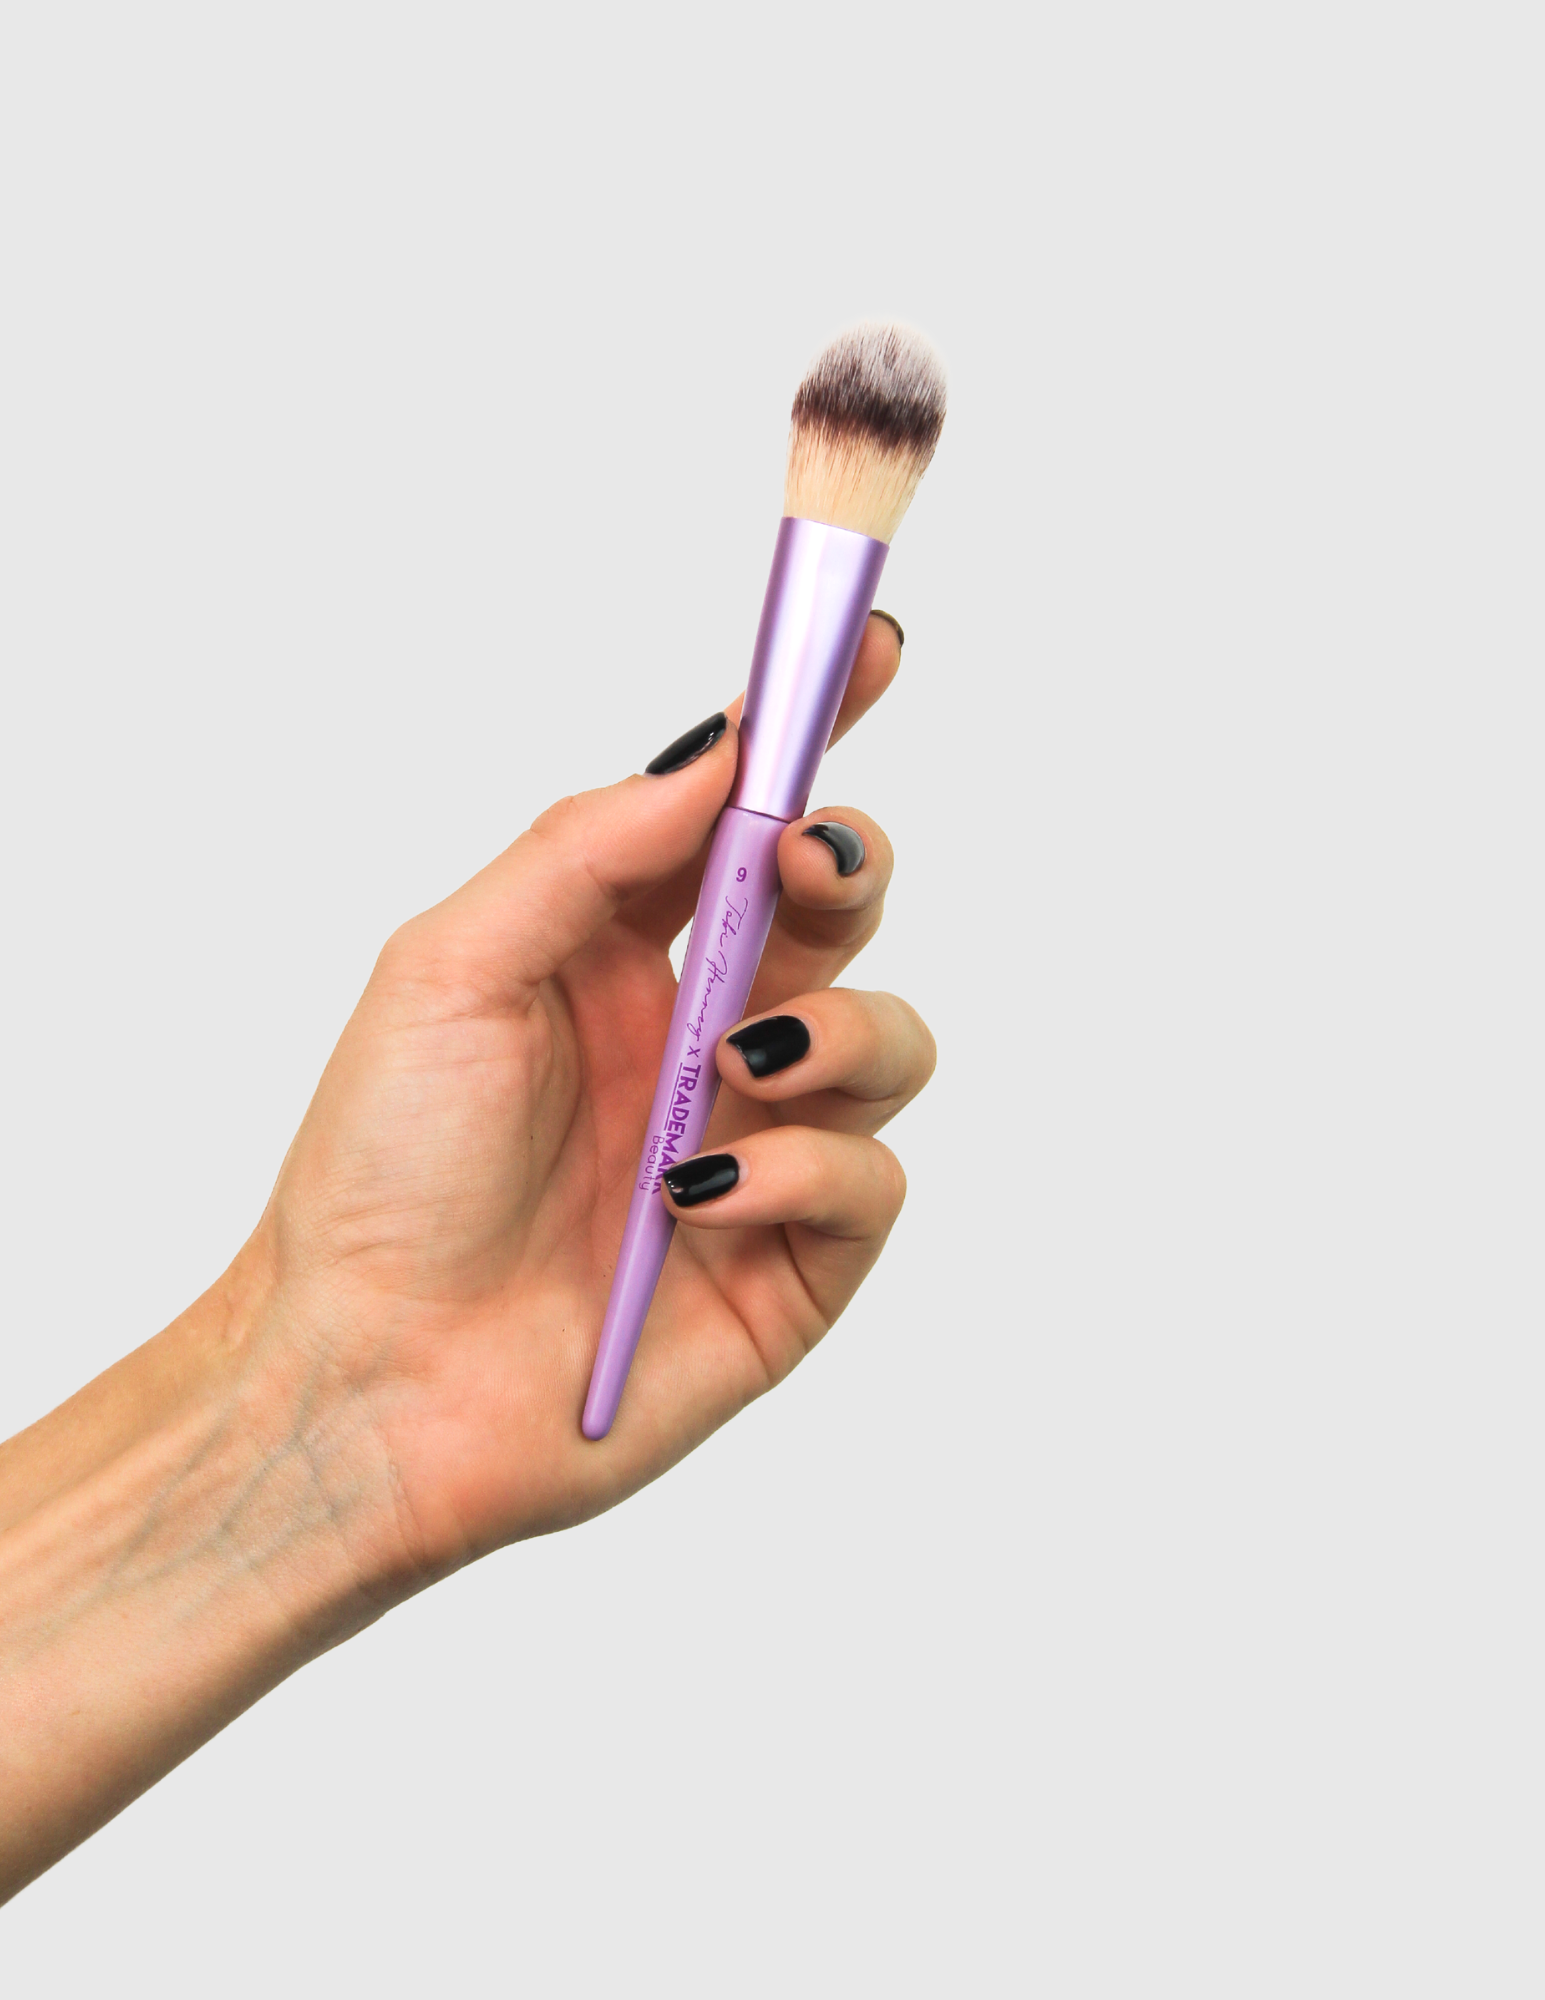 Blush Makeup Brush by Tobi Henney - #9 - Trademark Beauty